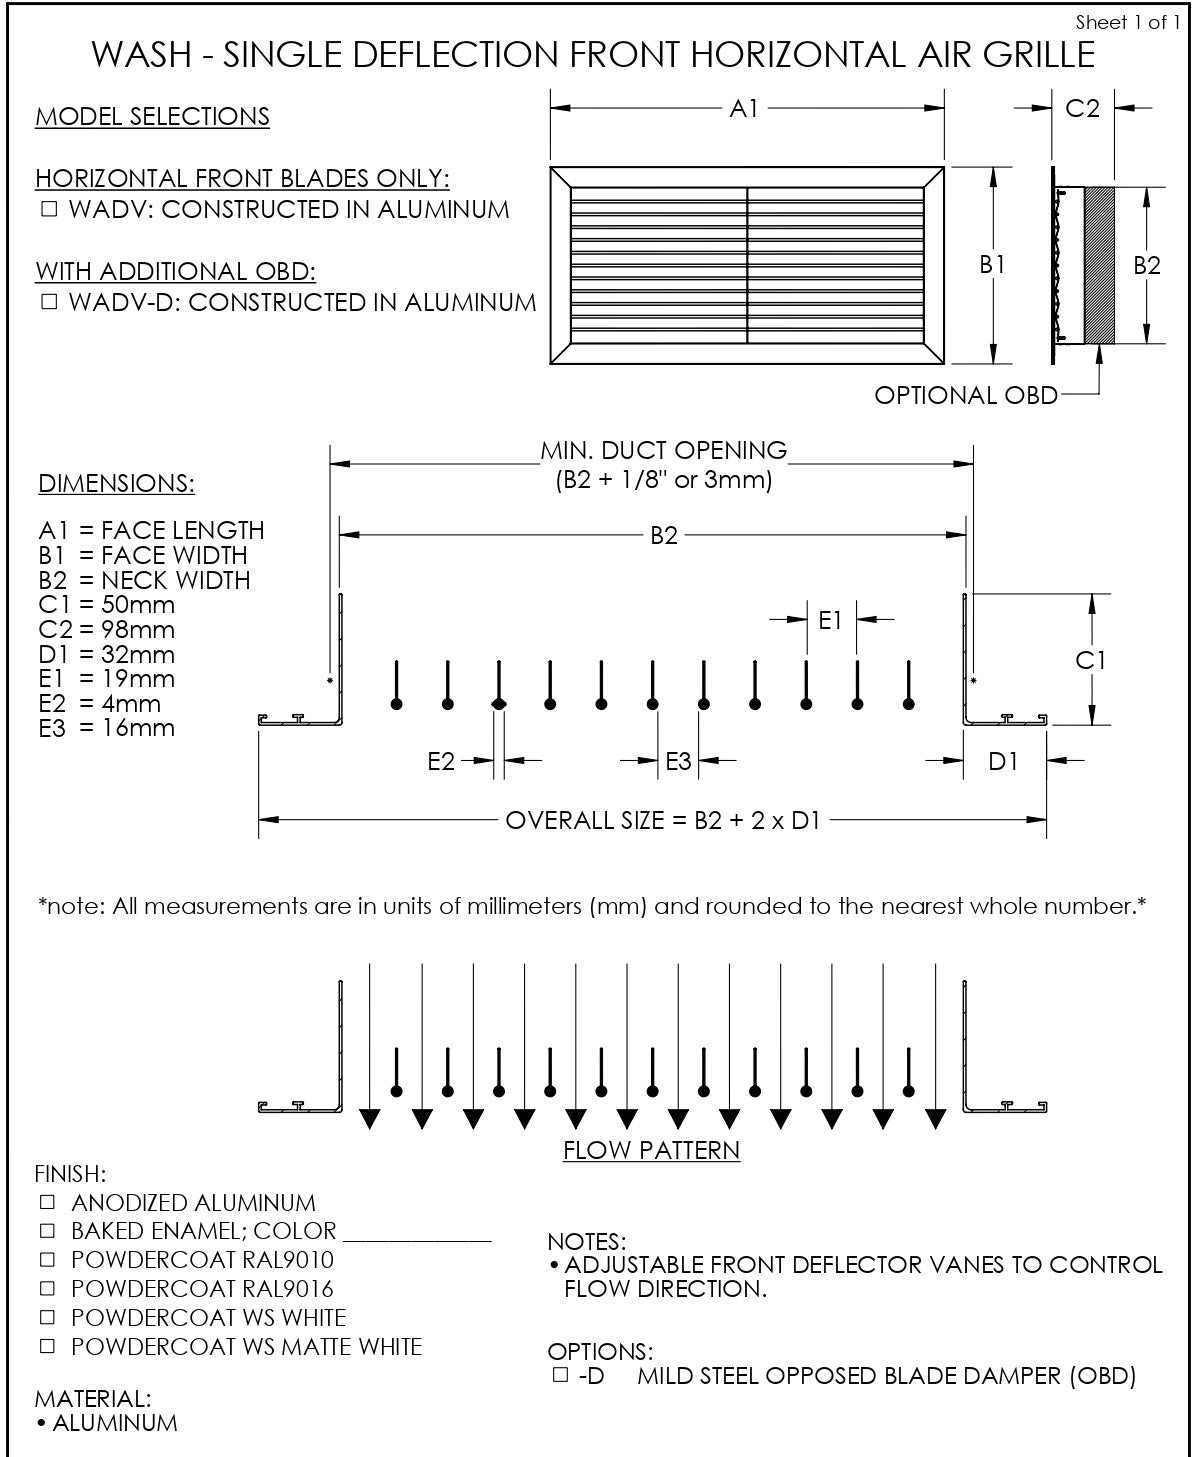 Single deflection air grille (horizontal panes)